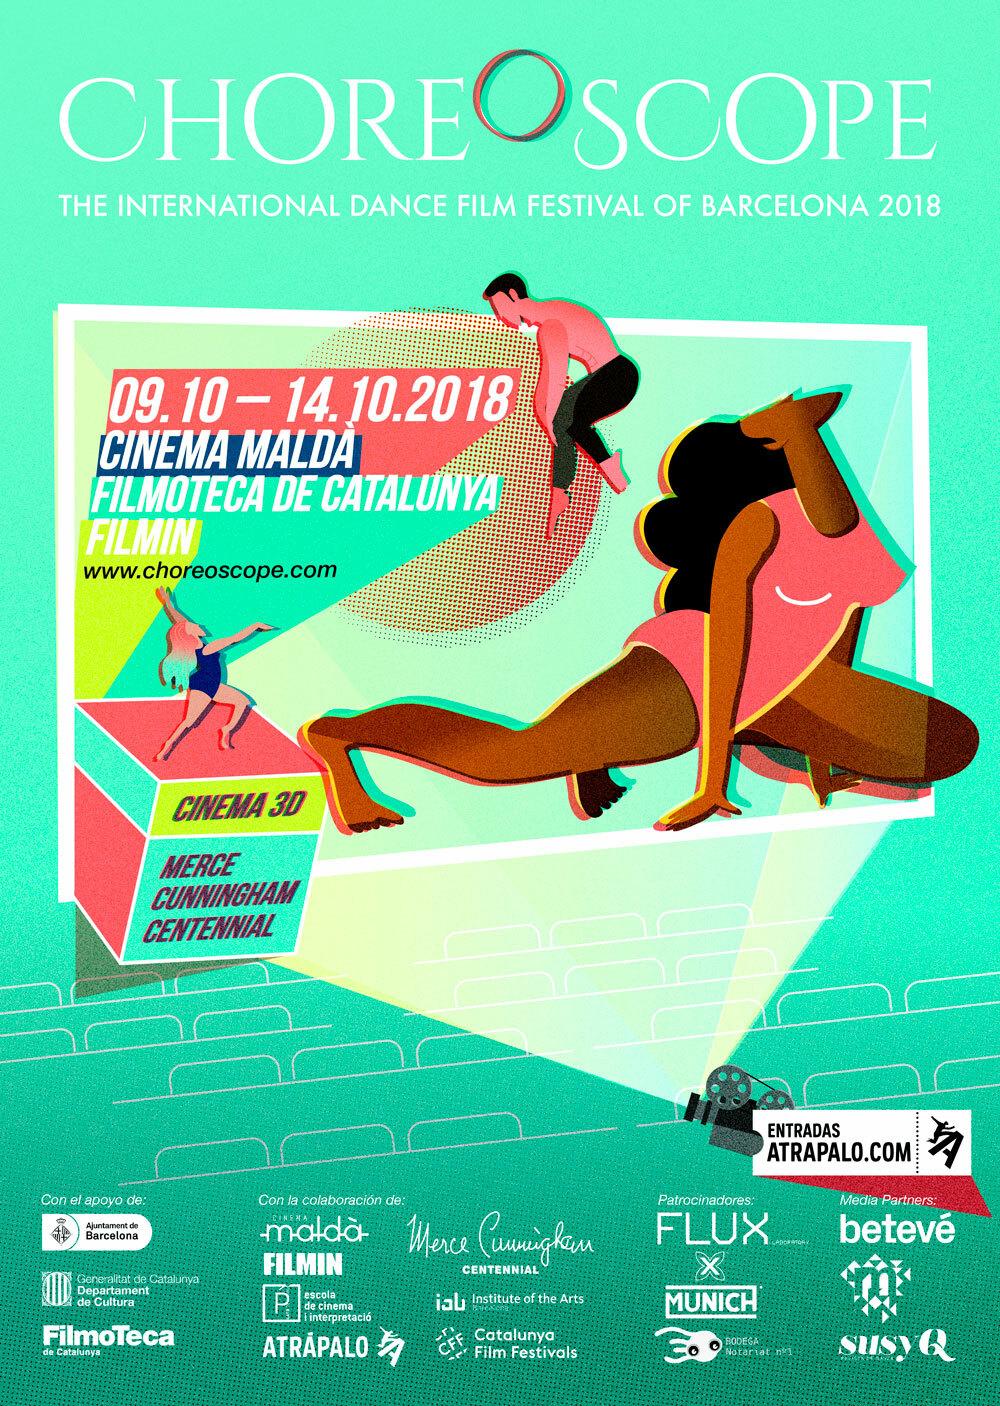 Choreoscope - Festival Internacional de Cine de Danza de Barcelona